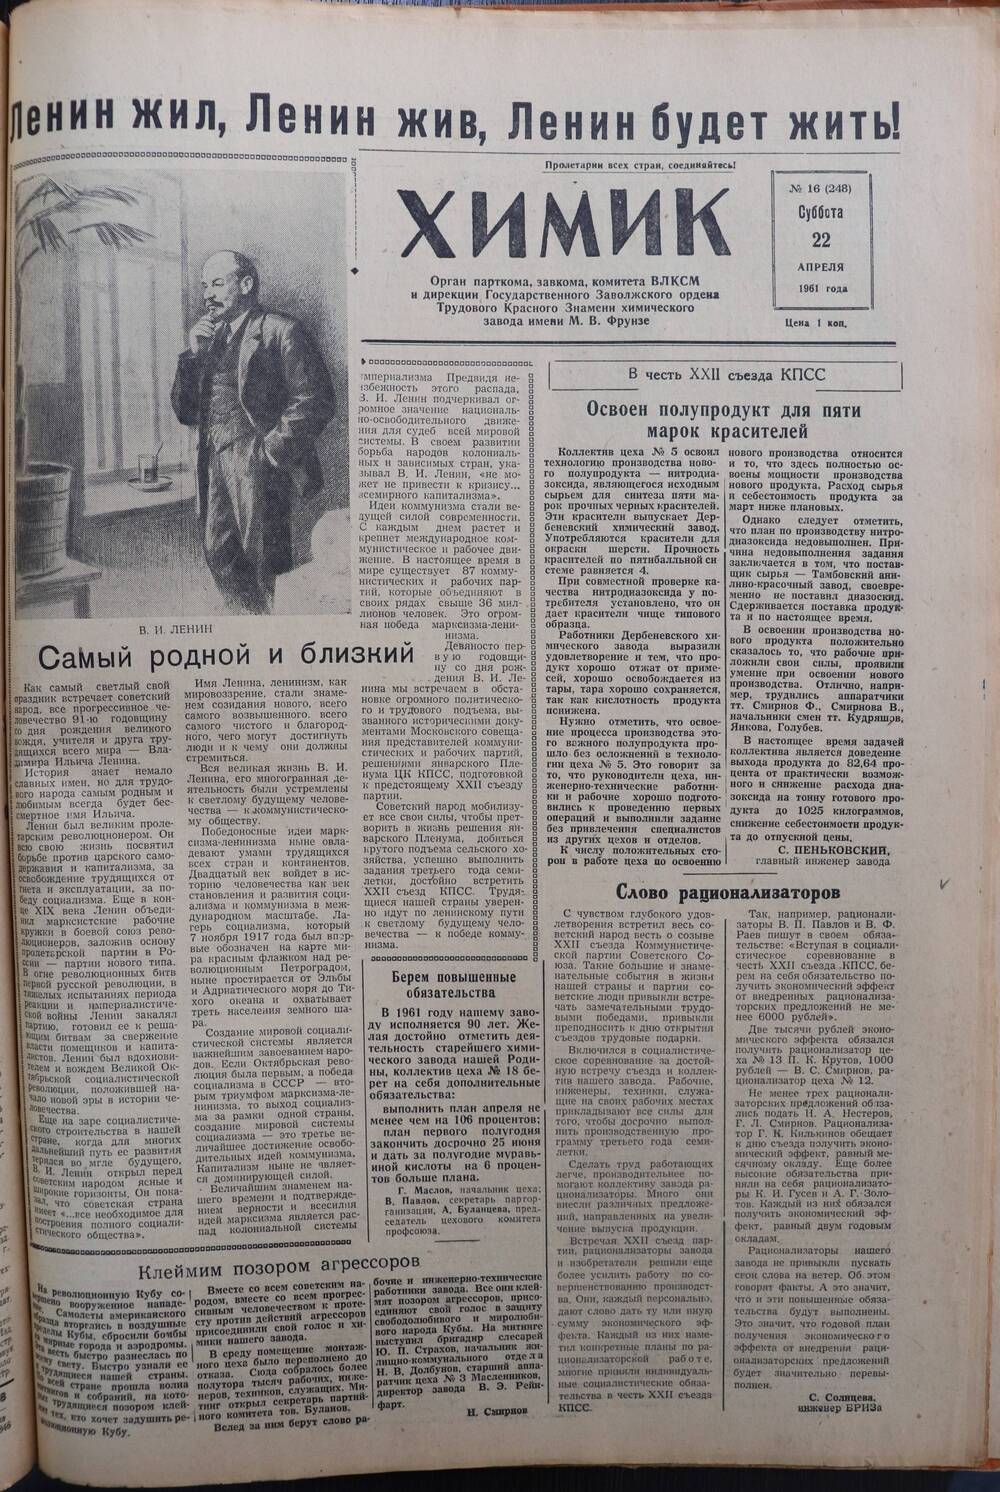 Газета «Химик» № 16 от 22 апреля 1961 года.